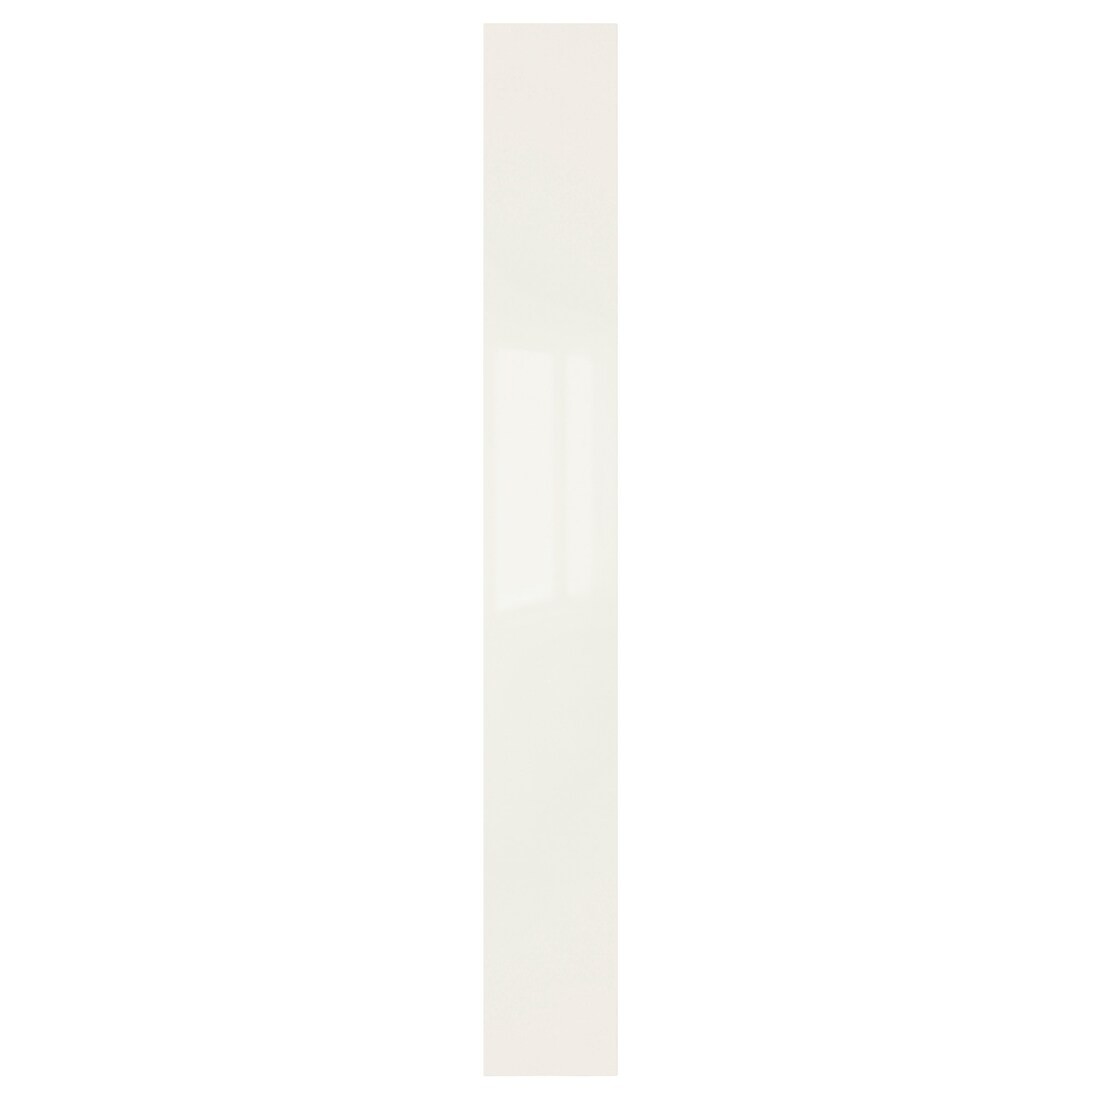 FARDAL ФАРДАЛЬ Двери с петлями, глянцевый белый, 25x195 cм